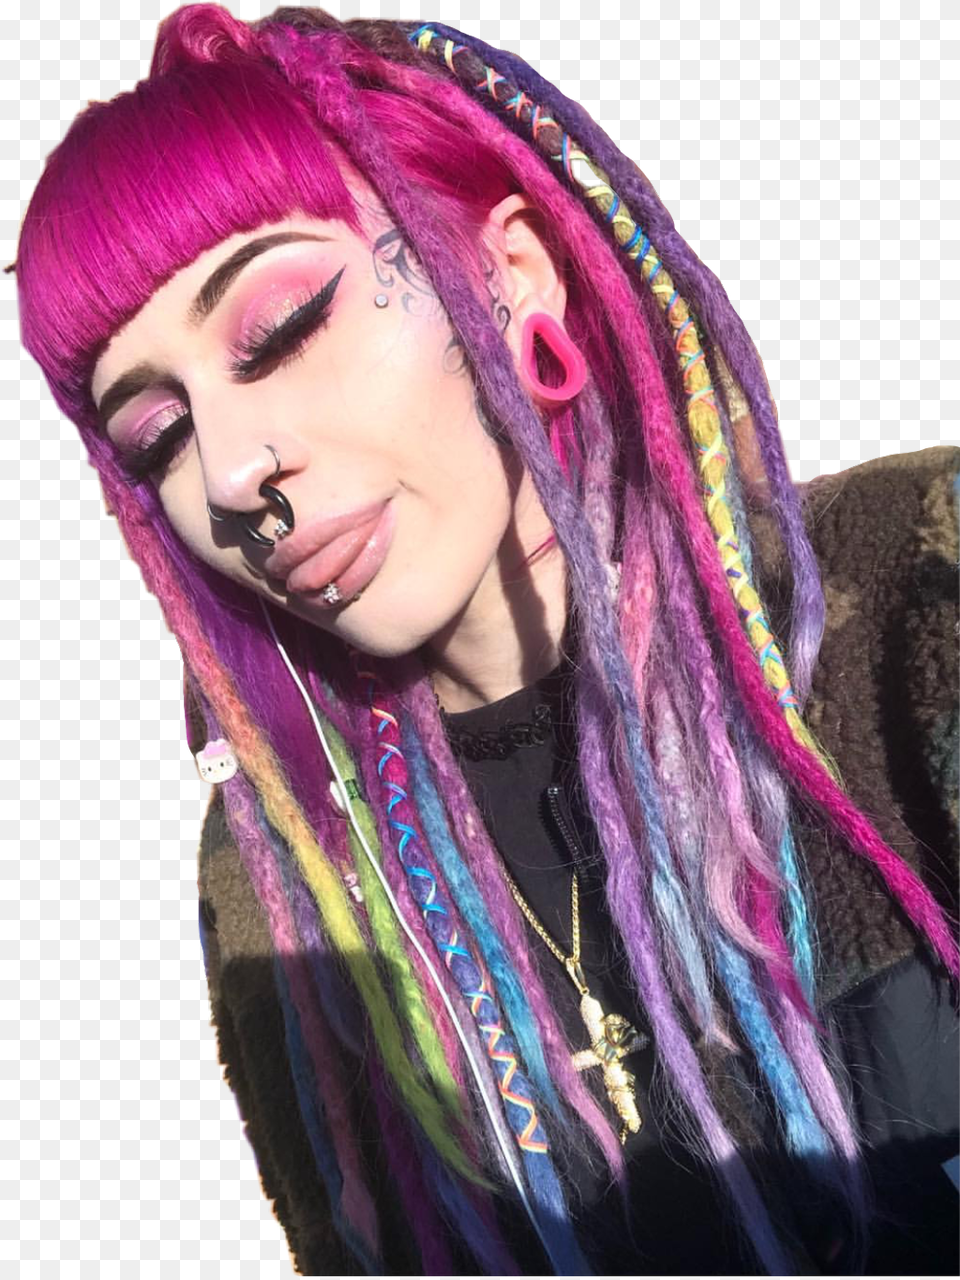 Piaisevil Piakaz Plasticpia Dreadlocks Rainbow Pia Kaz, Adult, Female, Hair, Person Free Png Download